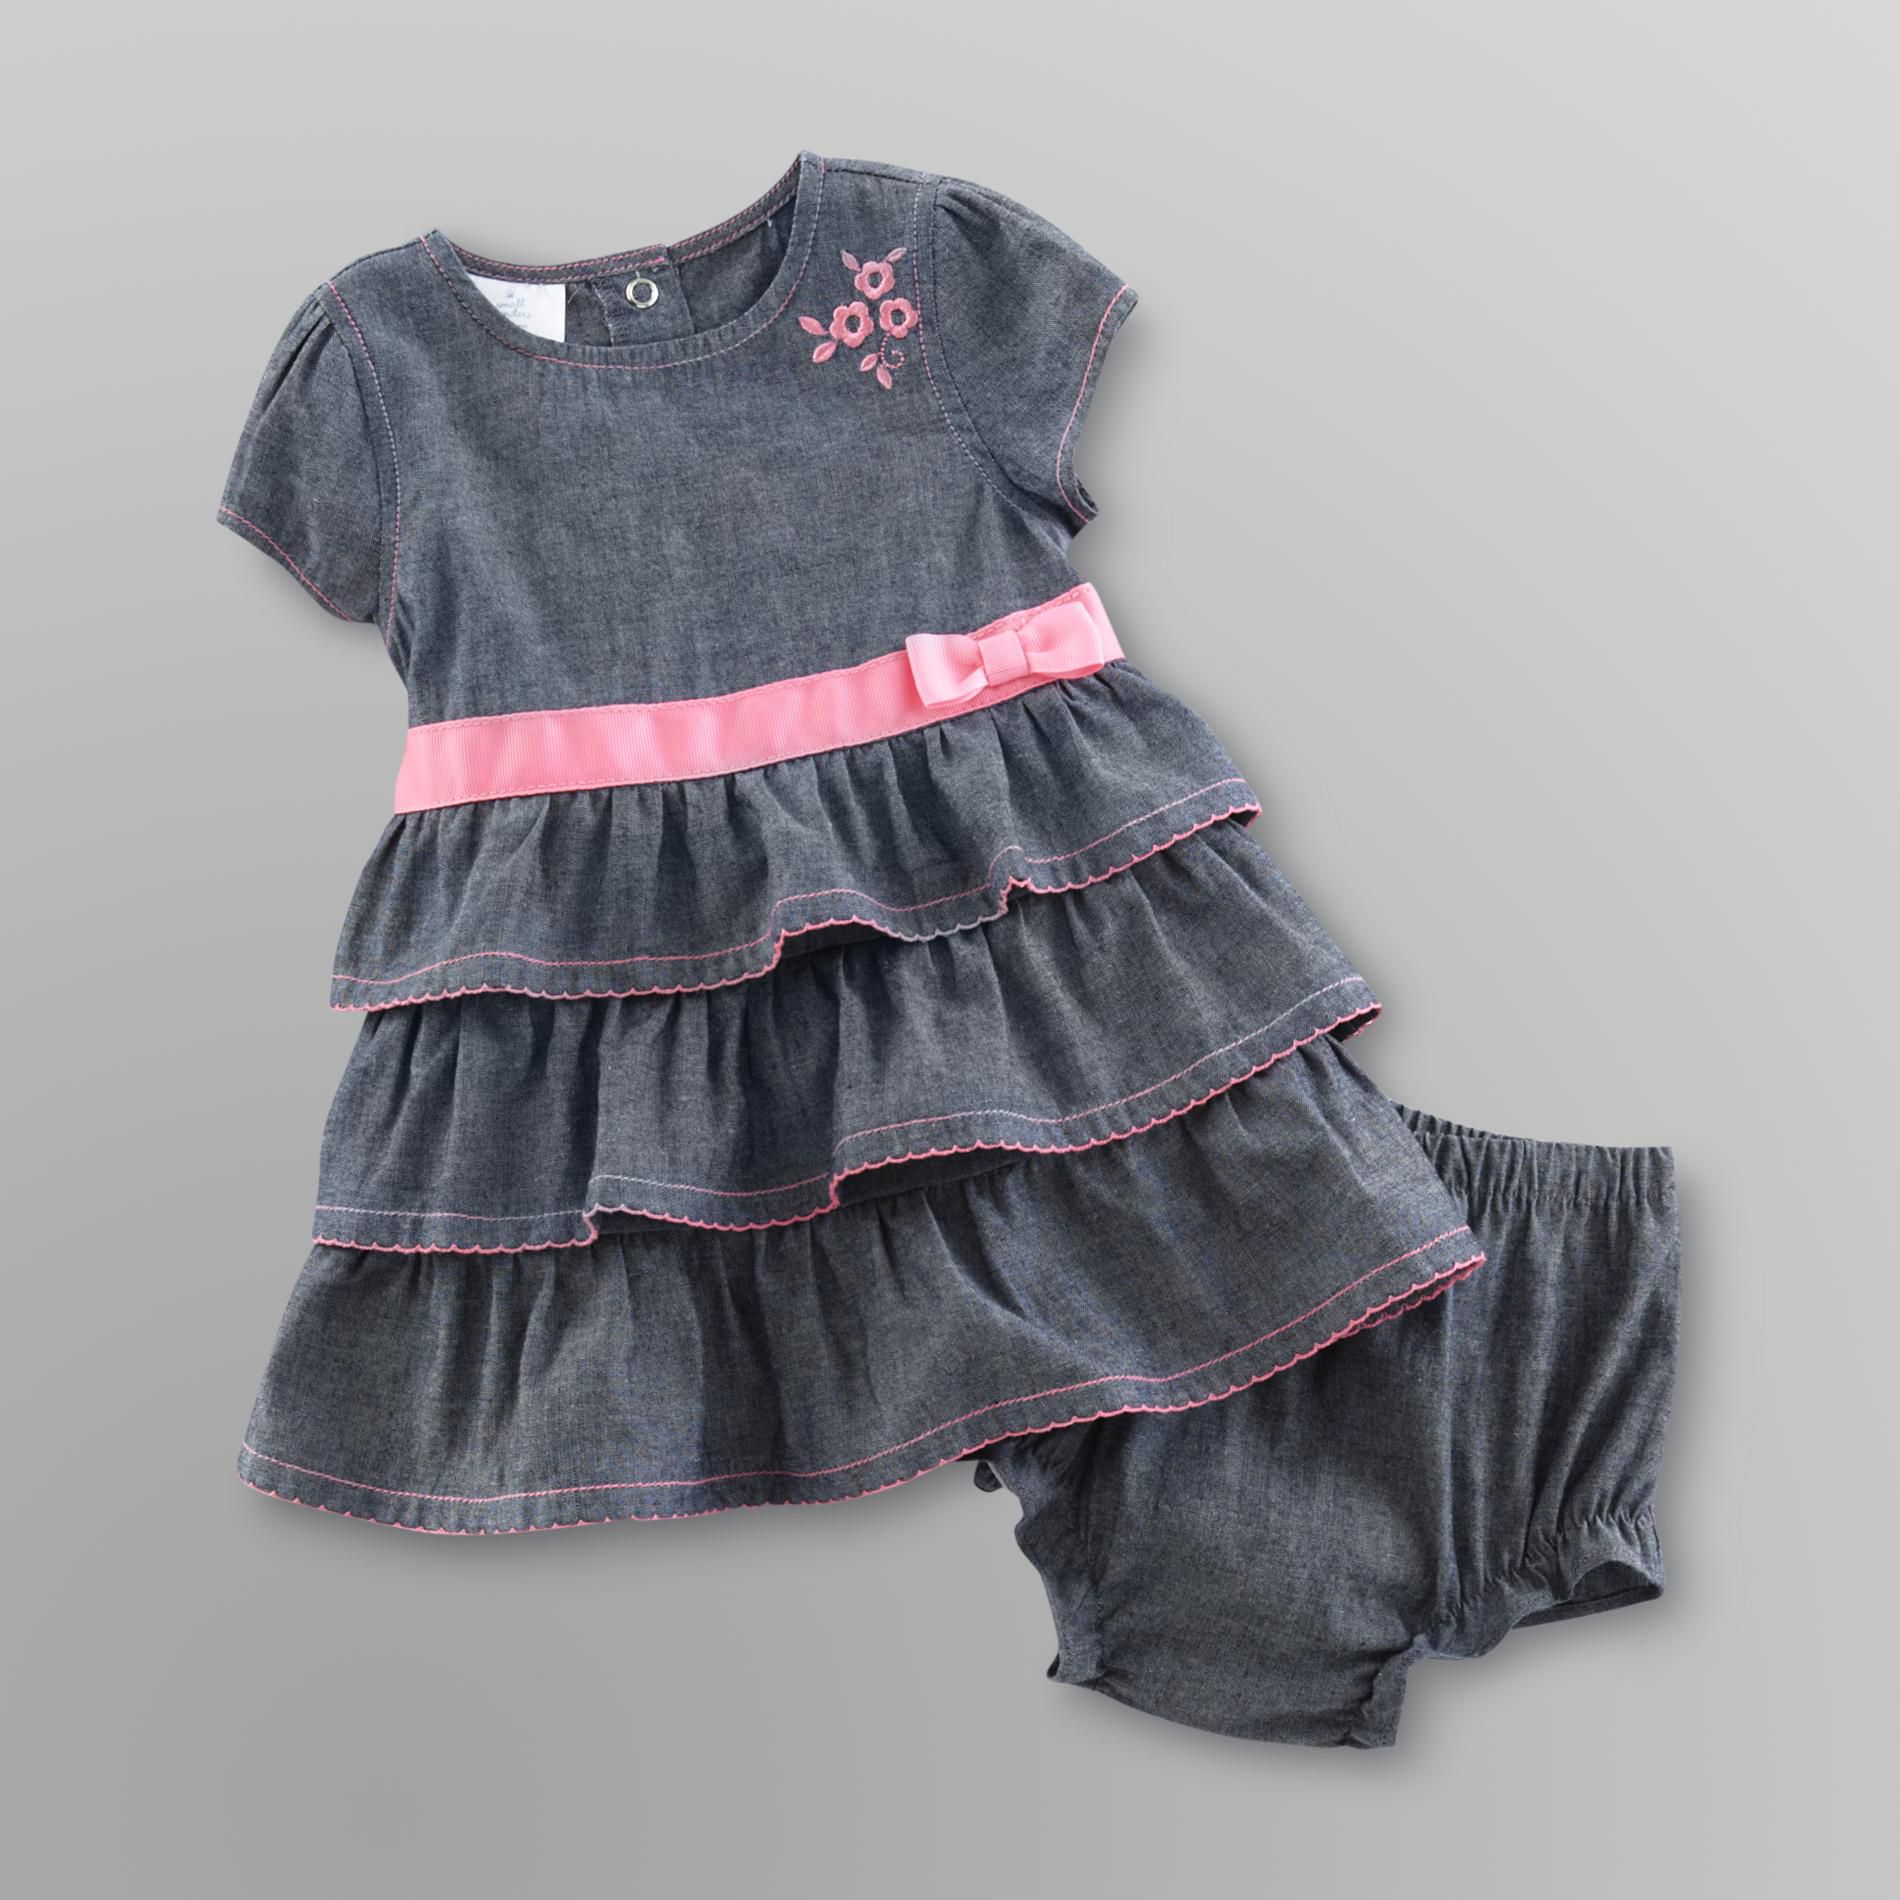 Small Wonders Infant Girl's Denim Chambray Dress